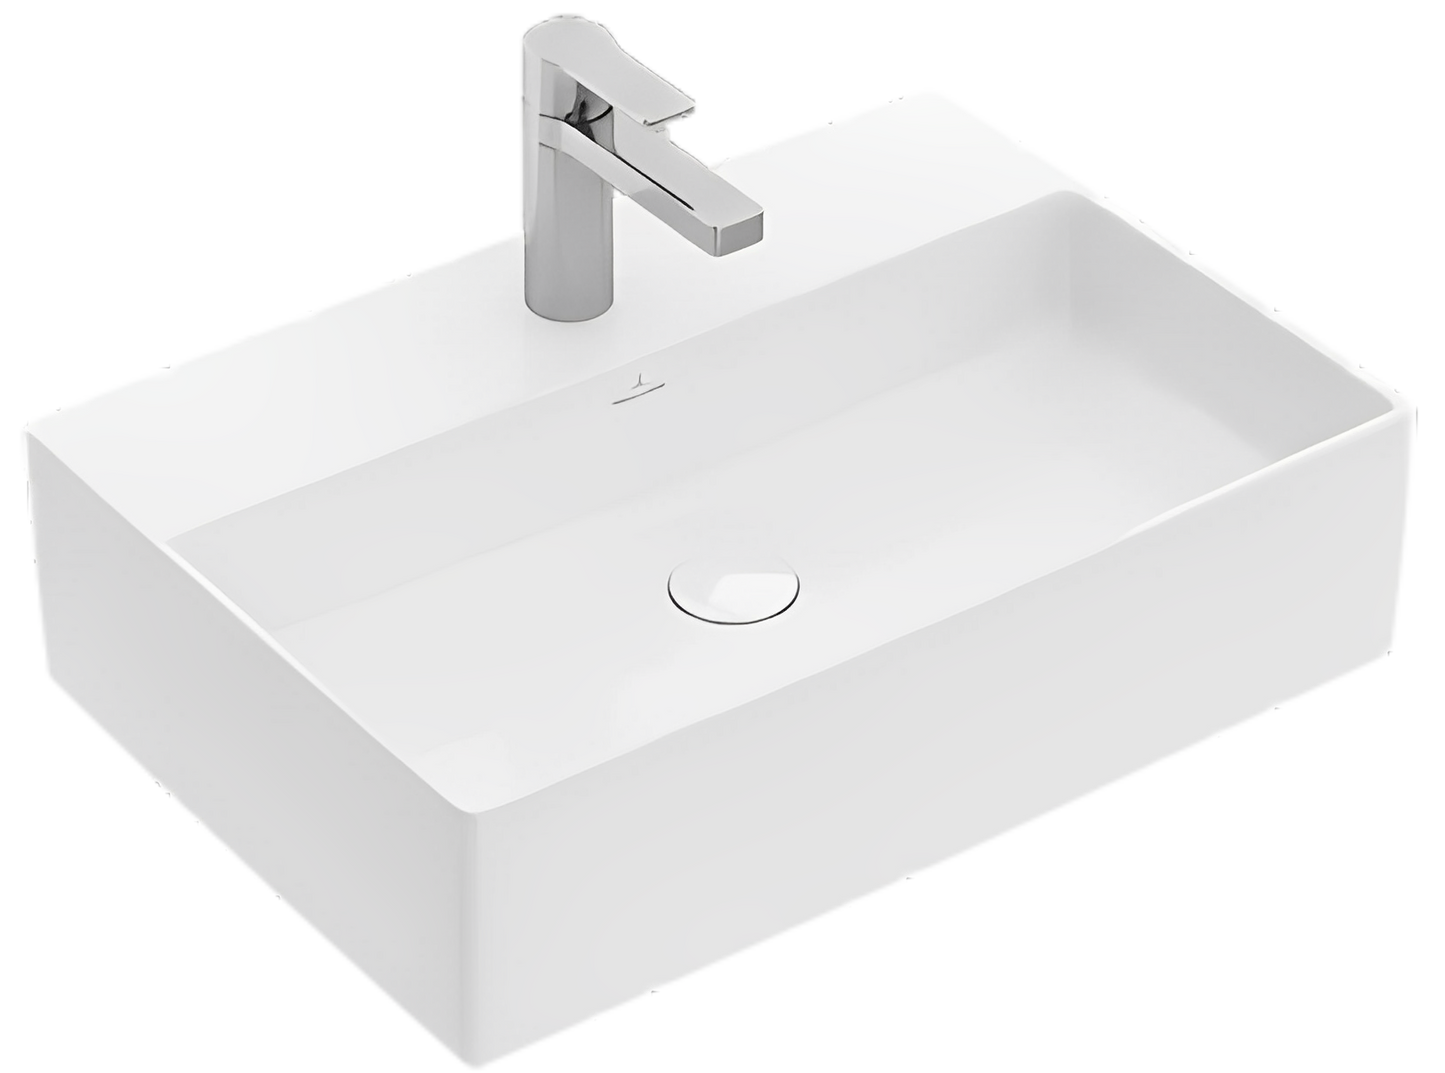 Villeroy & Boch Memento 2.0 Surface-mounted Bathroom Sink